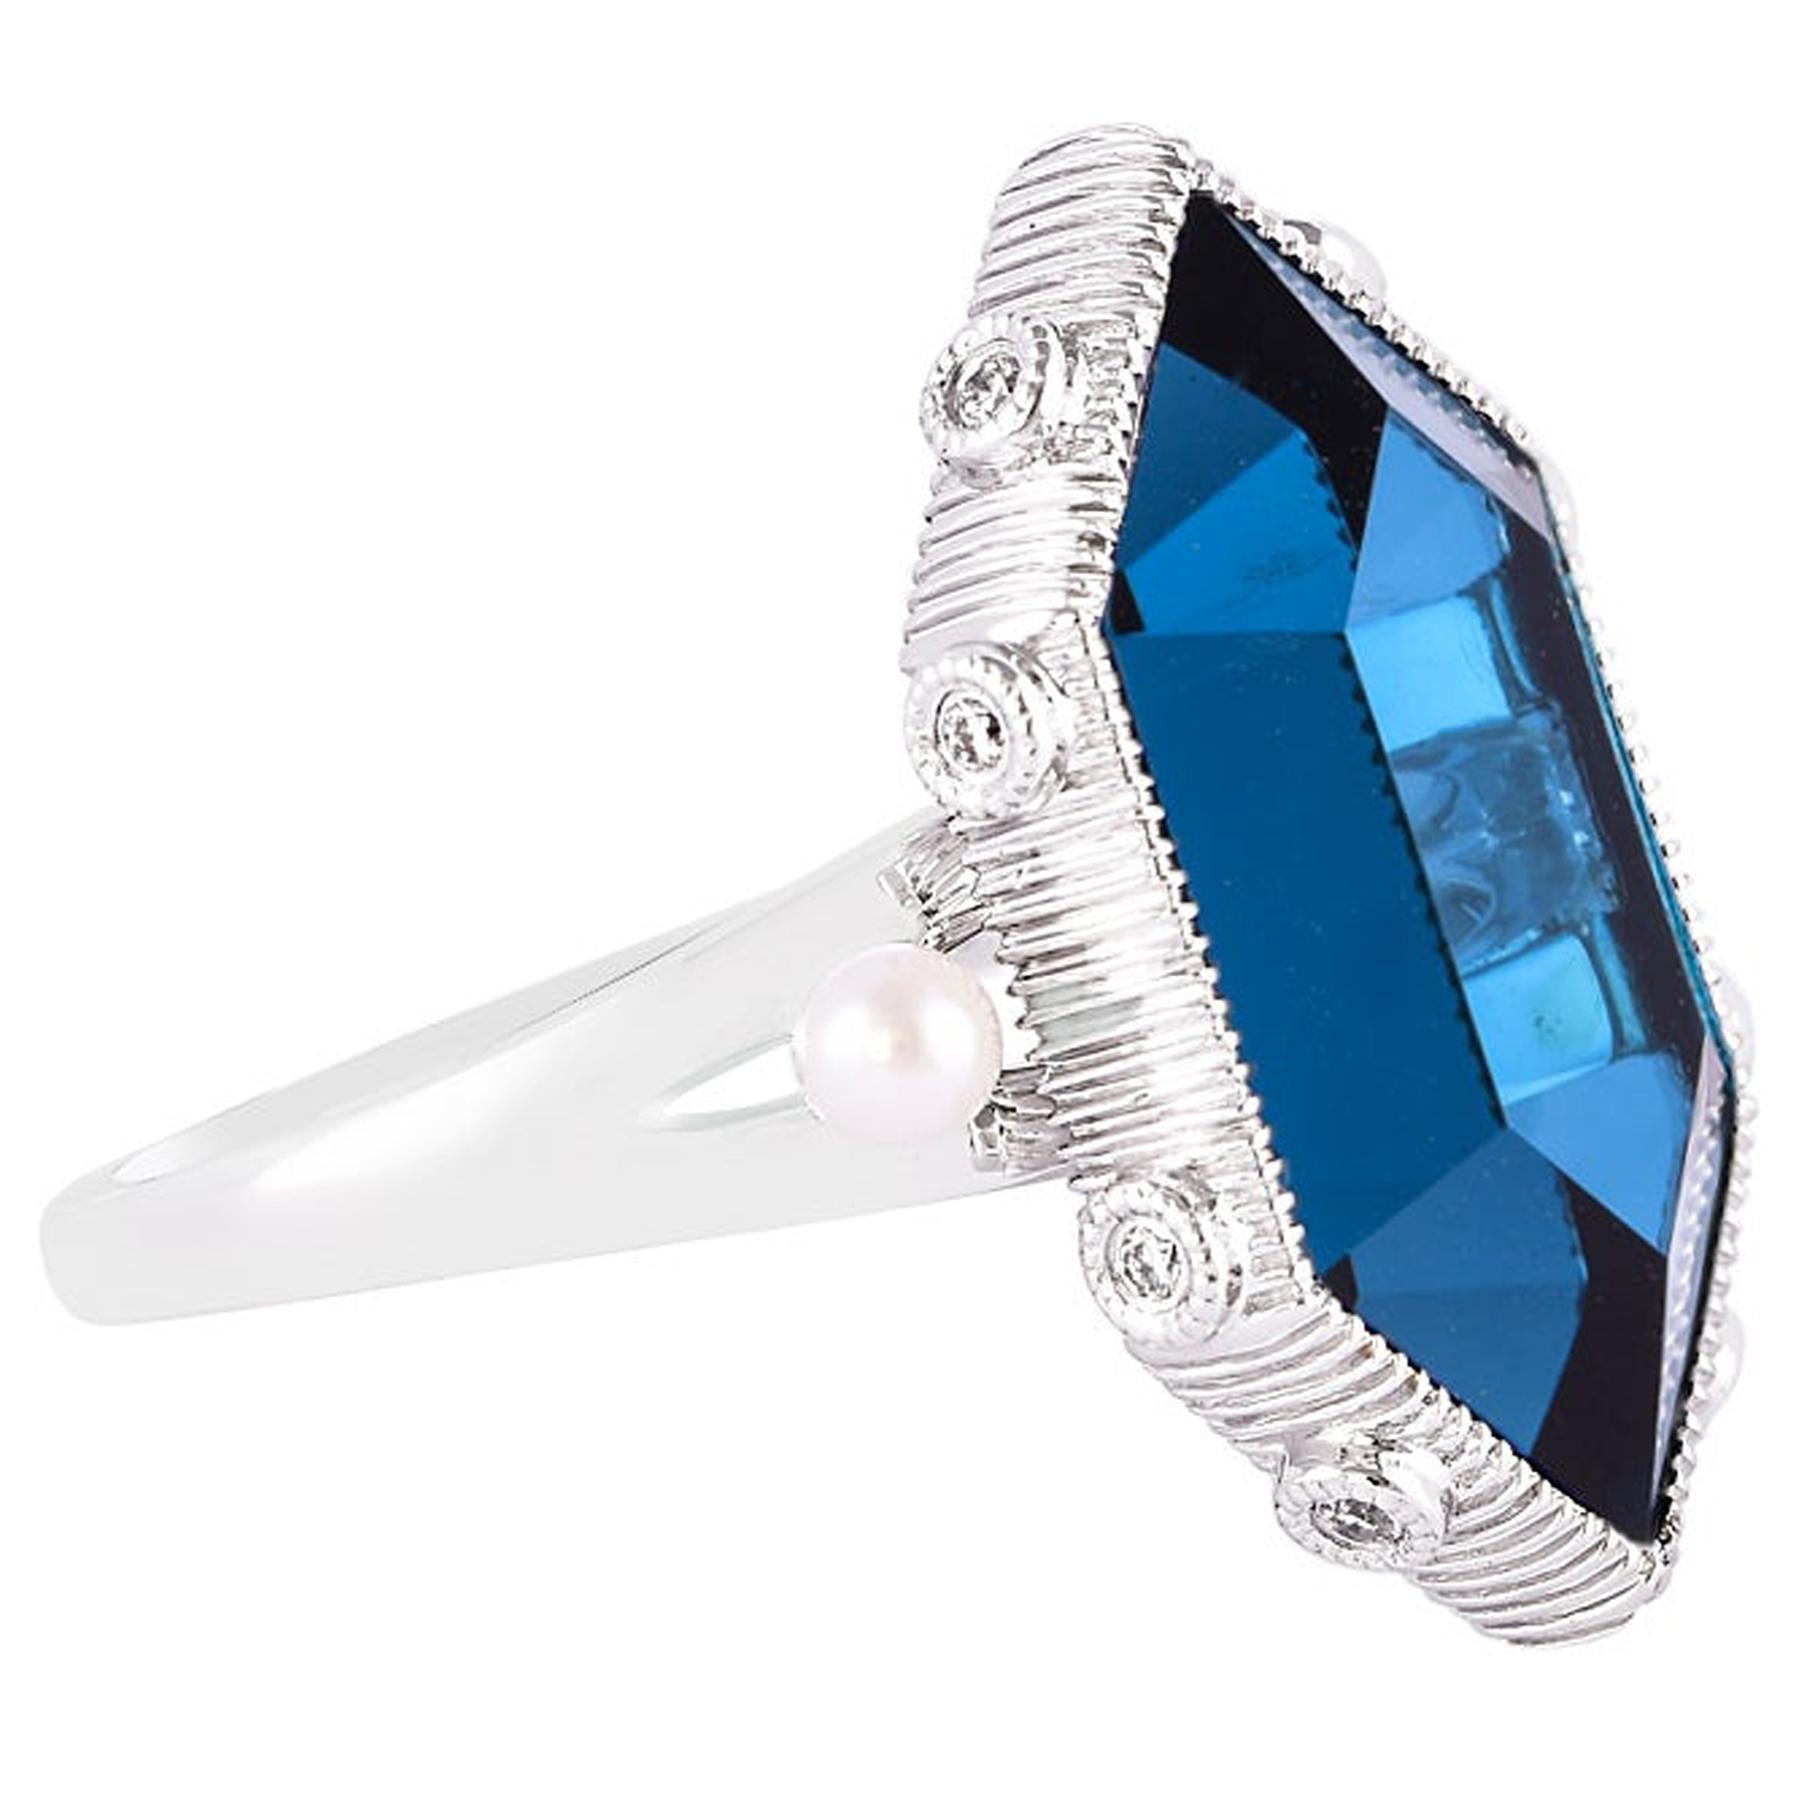 10.46 Carat London Blue Topaz Ring in 18 Karat White Gold with Diamonds & Pearls